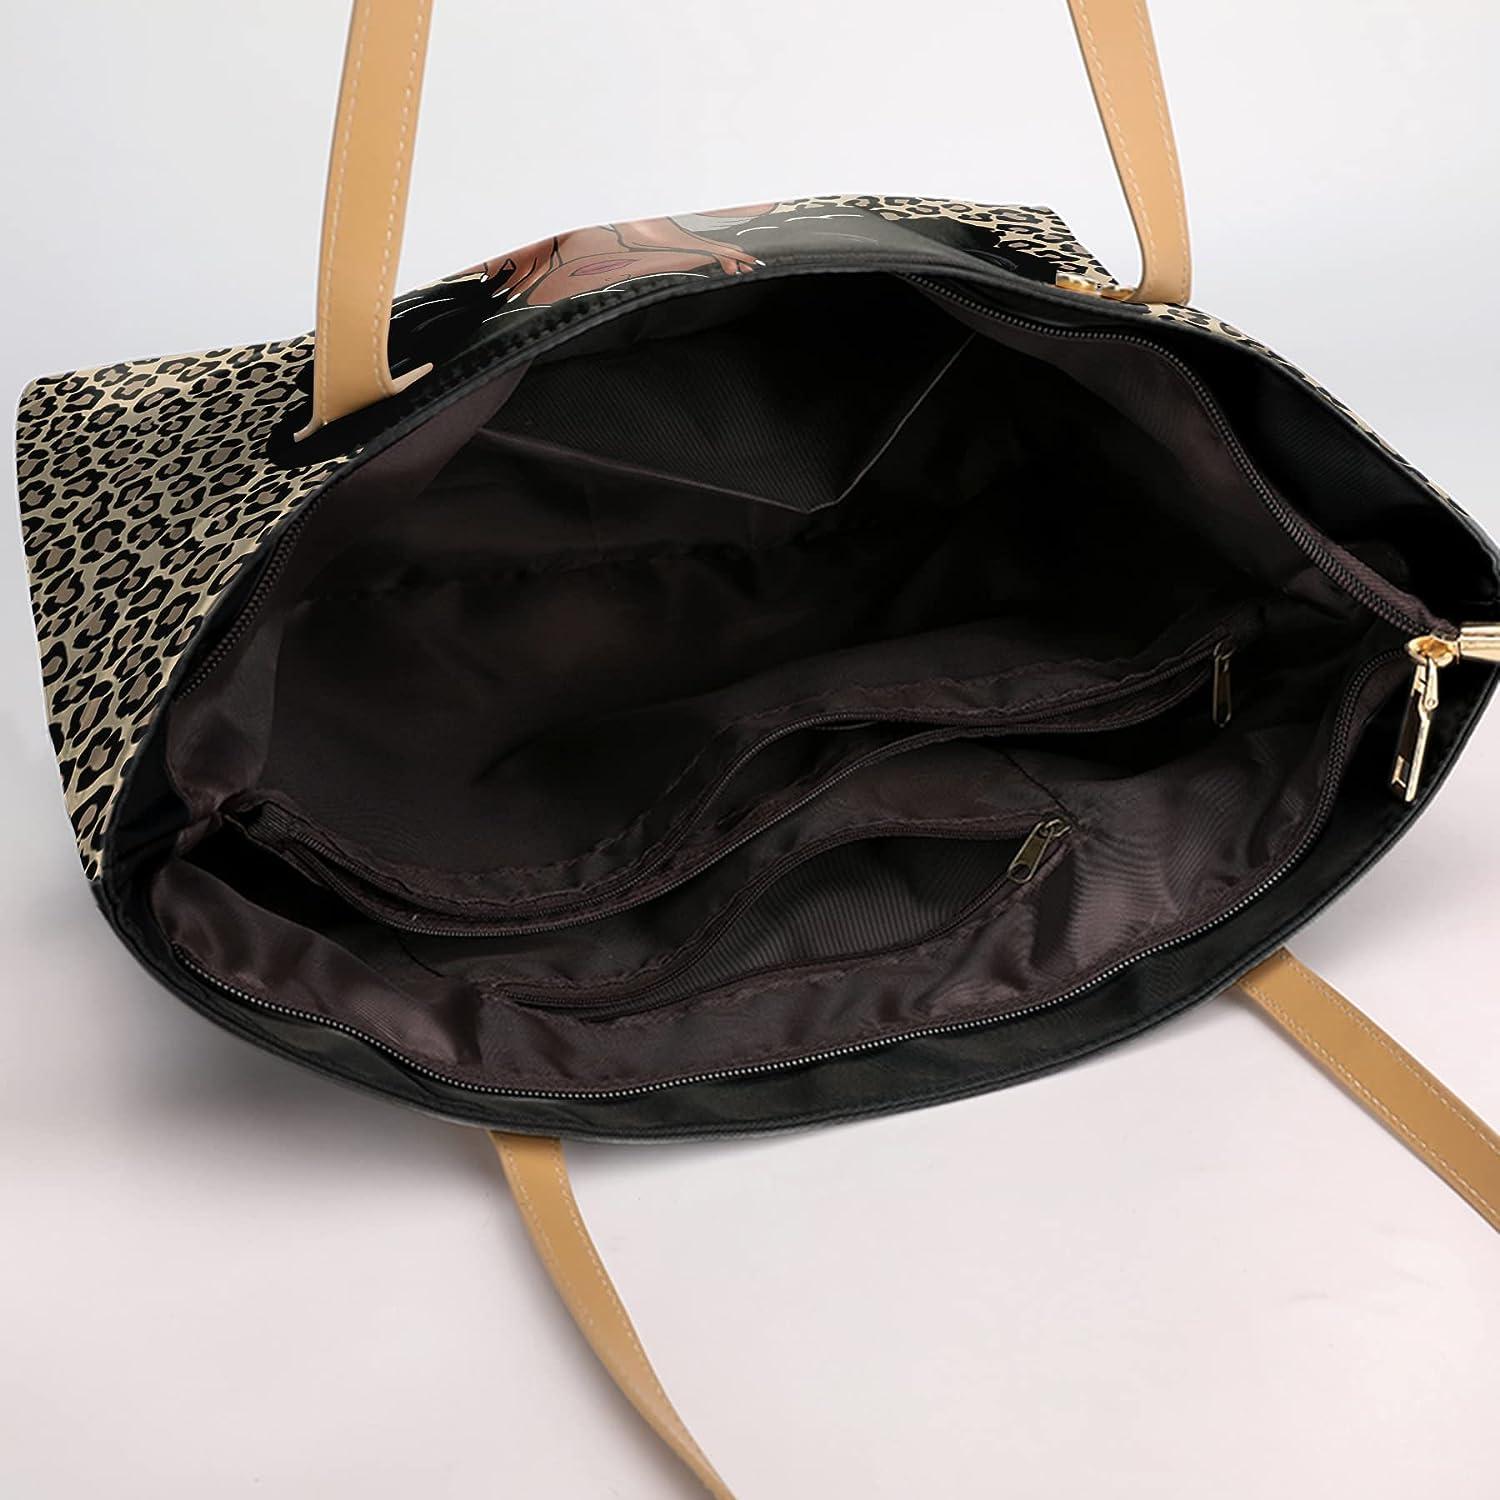  FZNHQL Tote Bags American Melanin Girl Gifts Handbags For Black  Women Afro Fashion Shoulder Bags Work Travel Bag : Clothing, Shoes & Jewelry